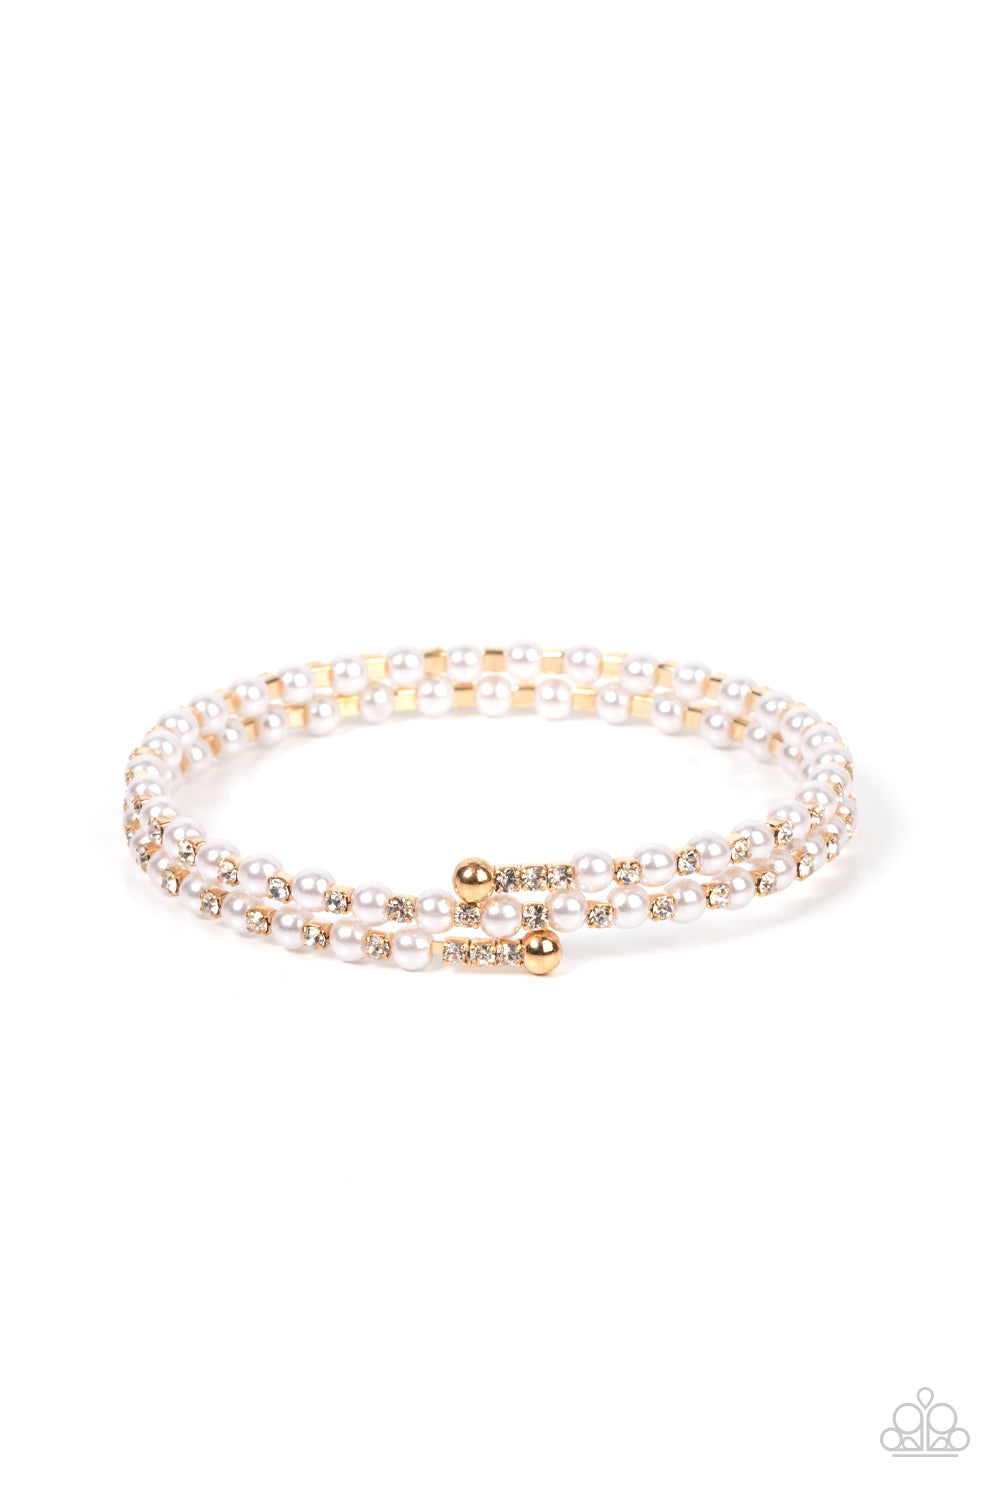 Regal Wraparound - Gold Frames, Dainty White Pearls, & White Rhinestone Paparazzi Coil Bracelet